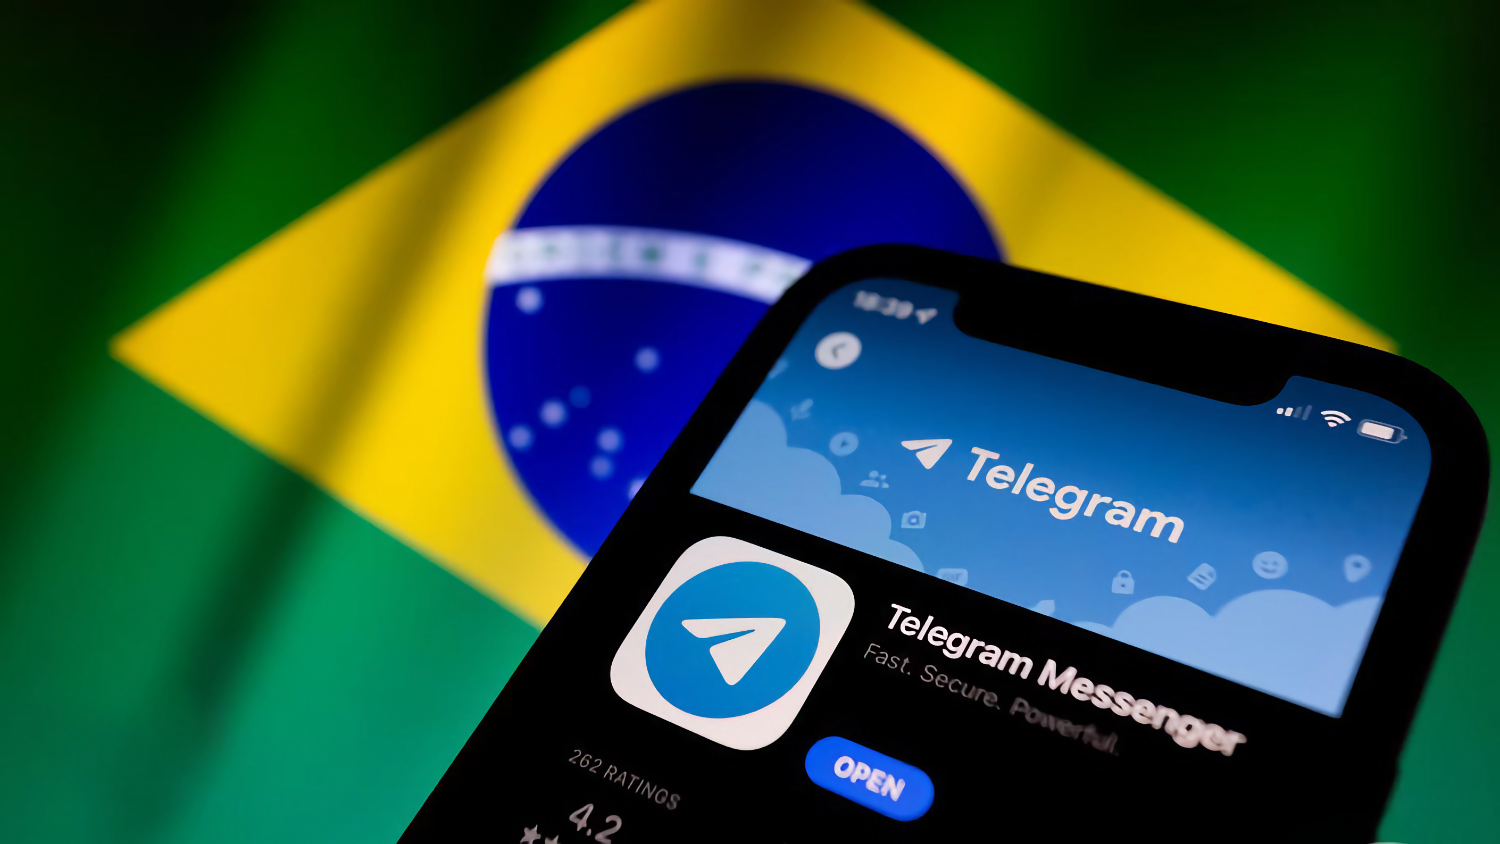 Хватило на три дня: в Бразилии разблокировали Telegram практически сразу после блокировки